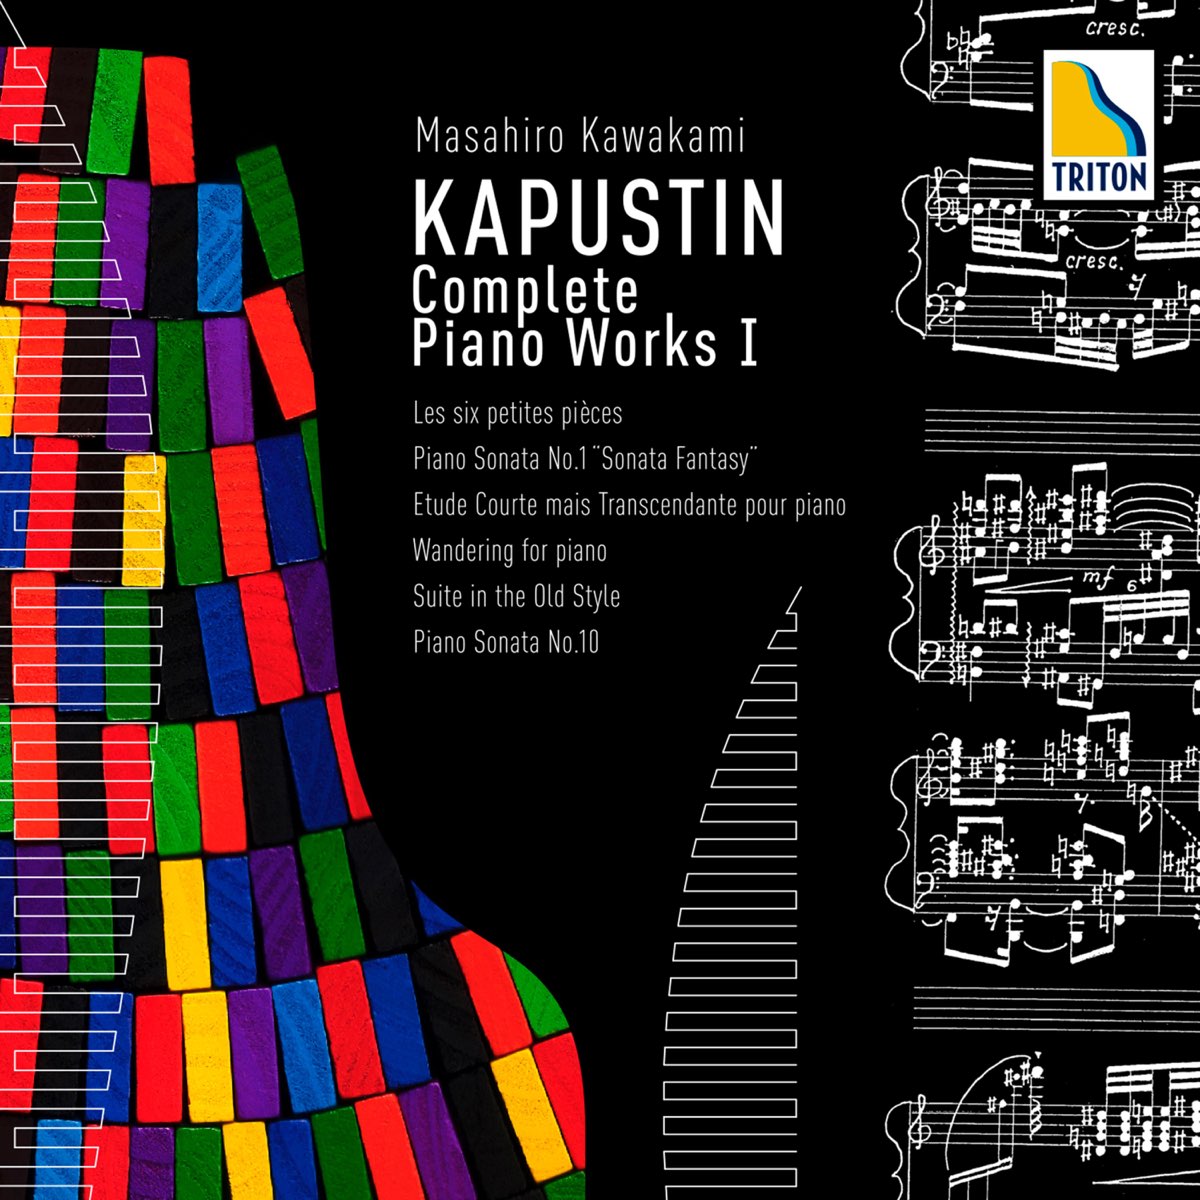 Kapustin Complete Piano Works I> Piano Sonata No. 10, Les six petites pieces,  etc. by Masahiro Kawakami on Apple Music